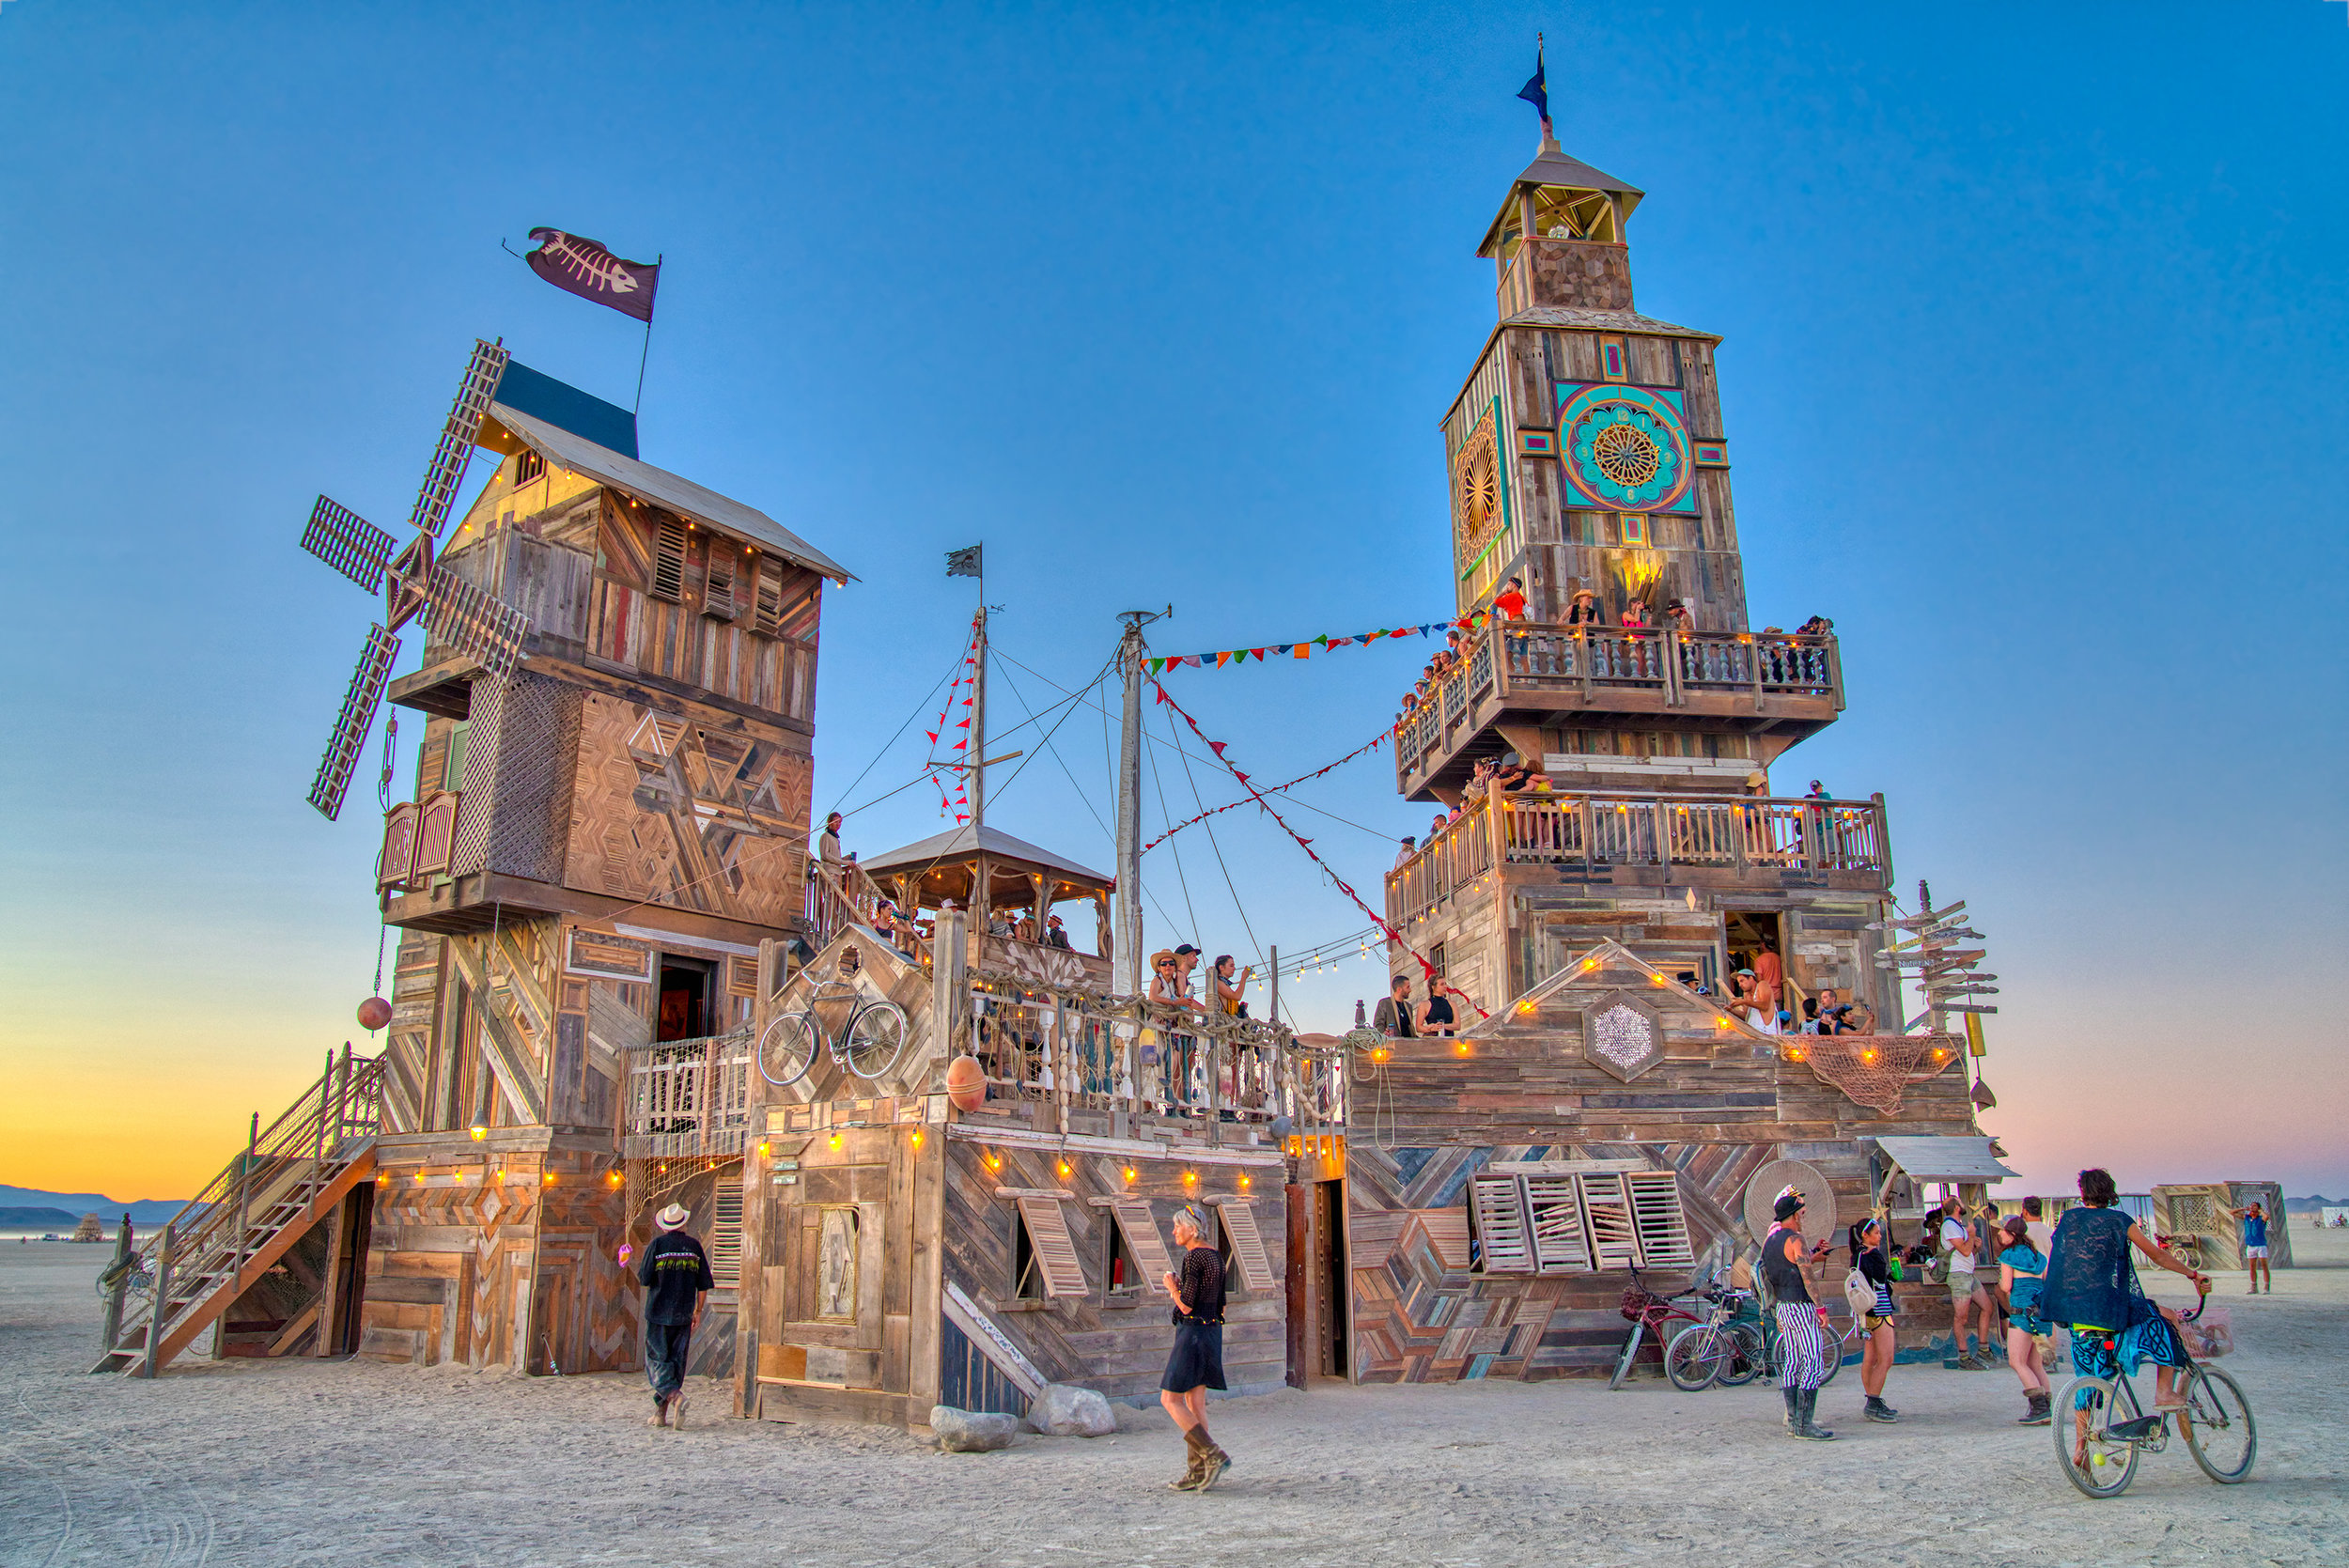 Burning Man 2019 - The Folly